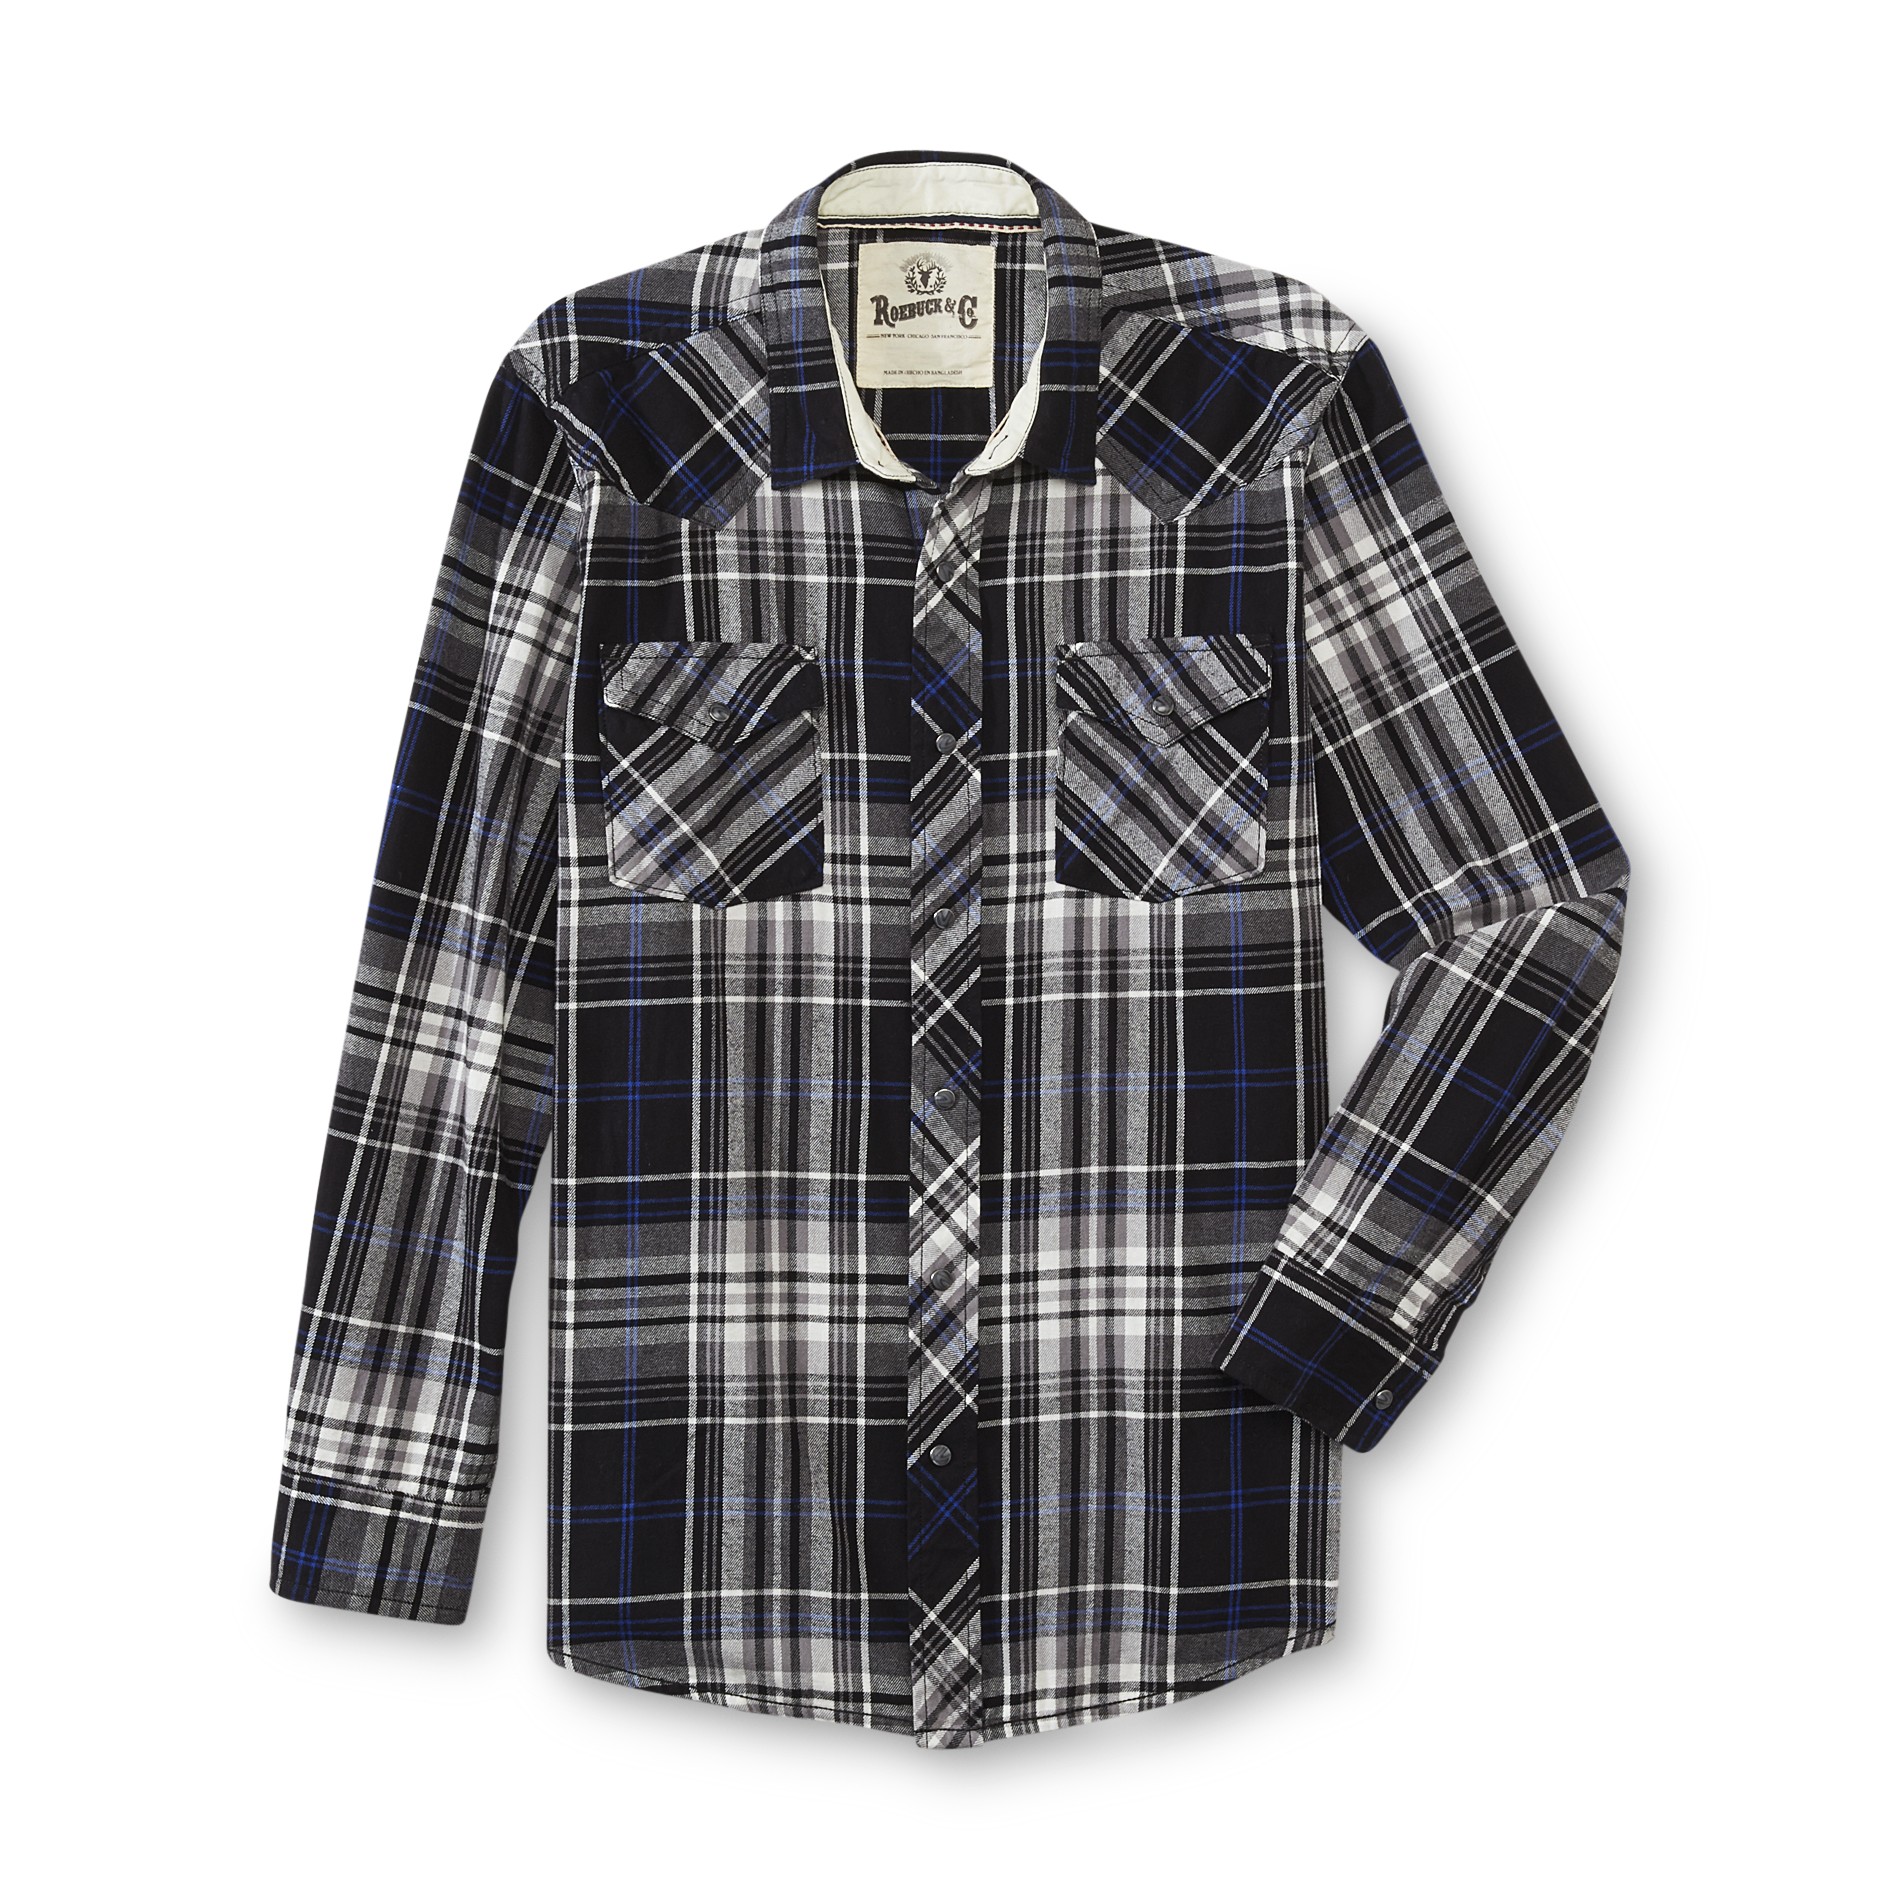 Roebuck & Co. Young Men's Long-Sleeve Woven Shirt - Plaid